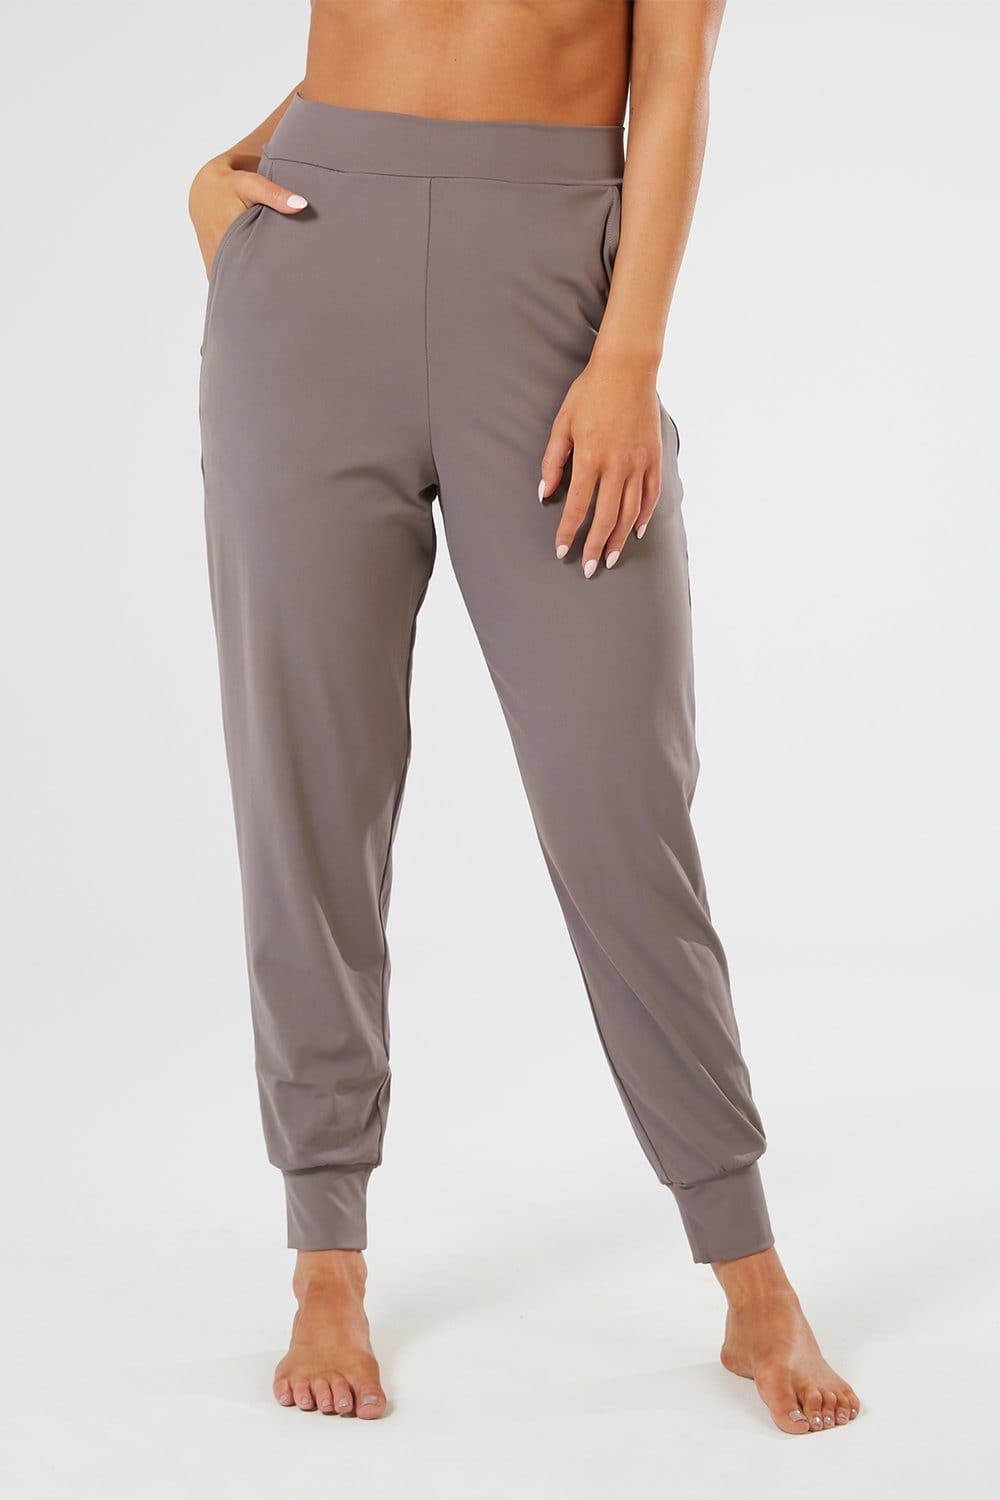 YOGALICIOUS Terry Basic Slim Fit Joggers - ShopStyle Activewear Pants